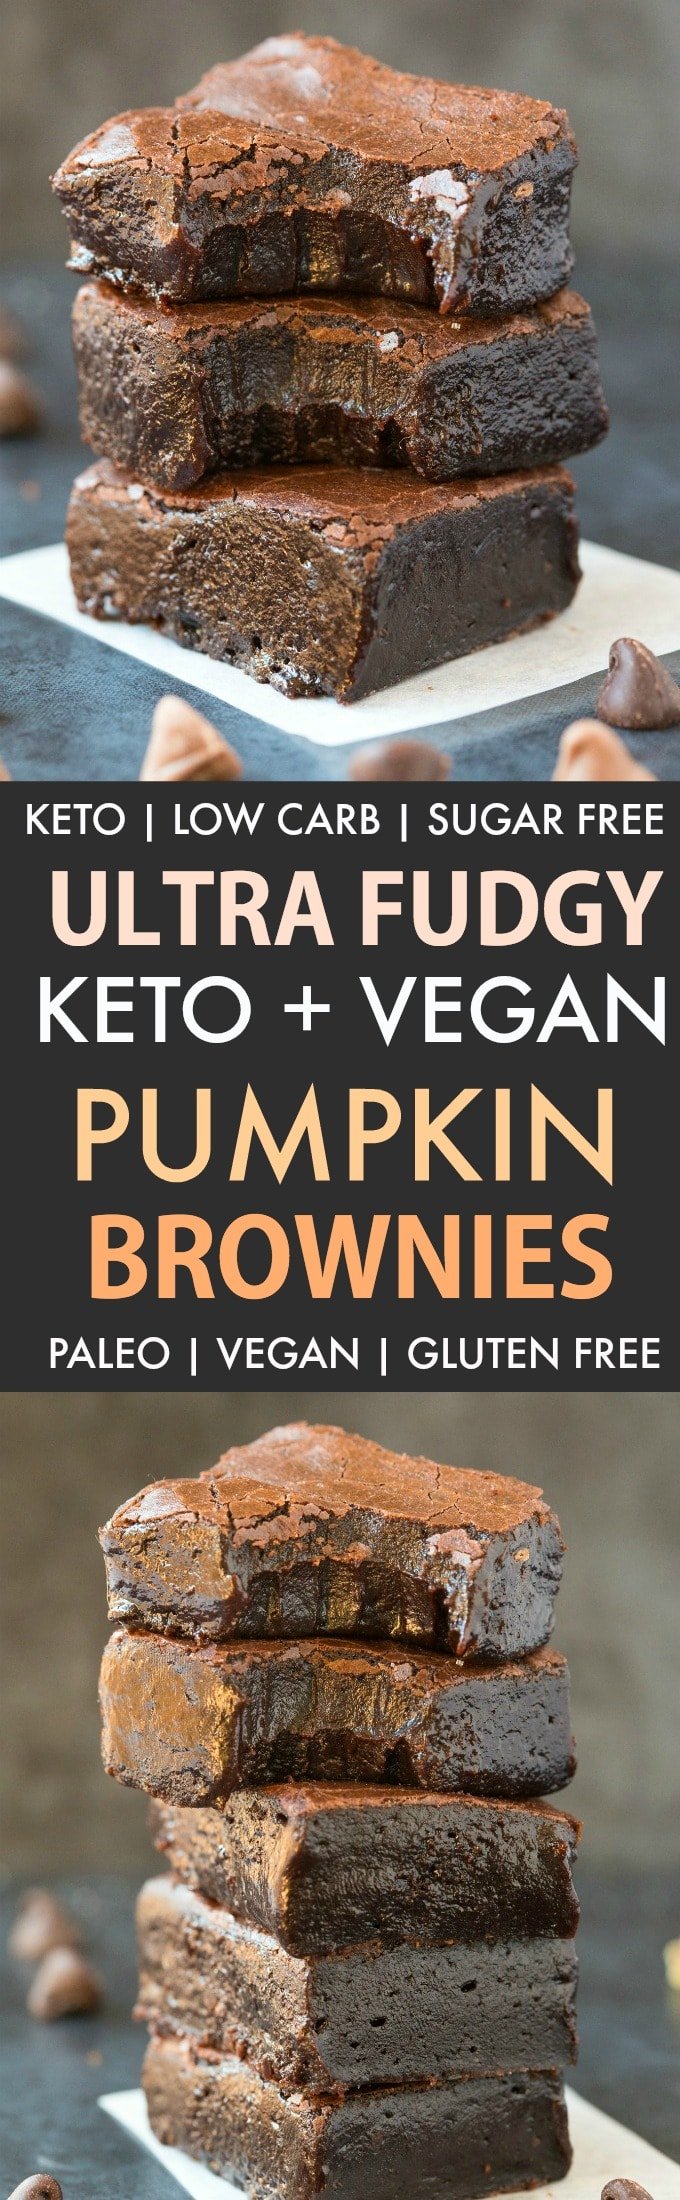 Fudgy Keto Vegan Pumpkin Brownies